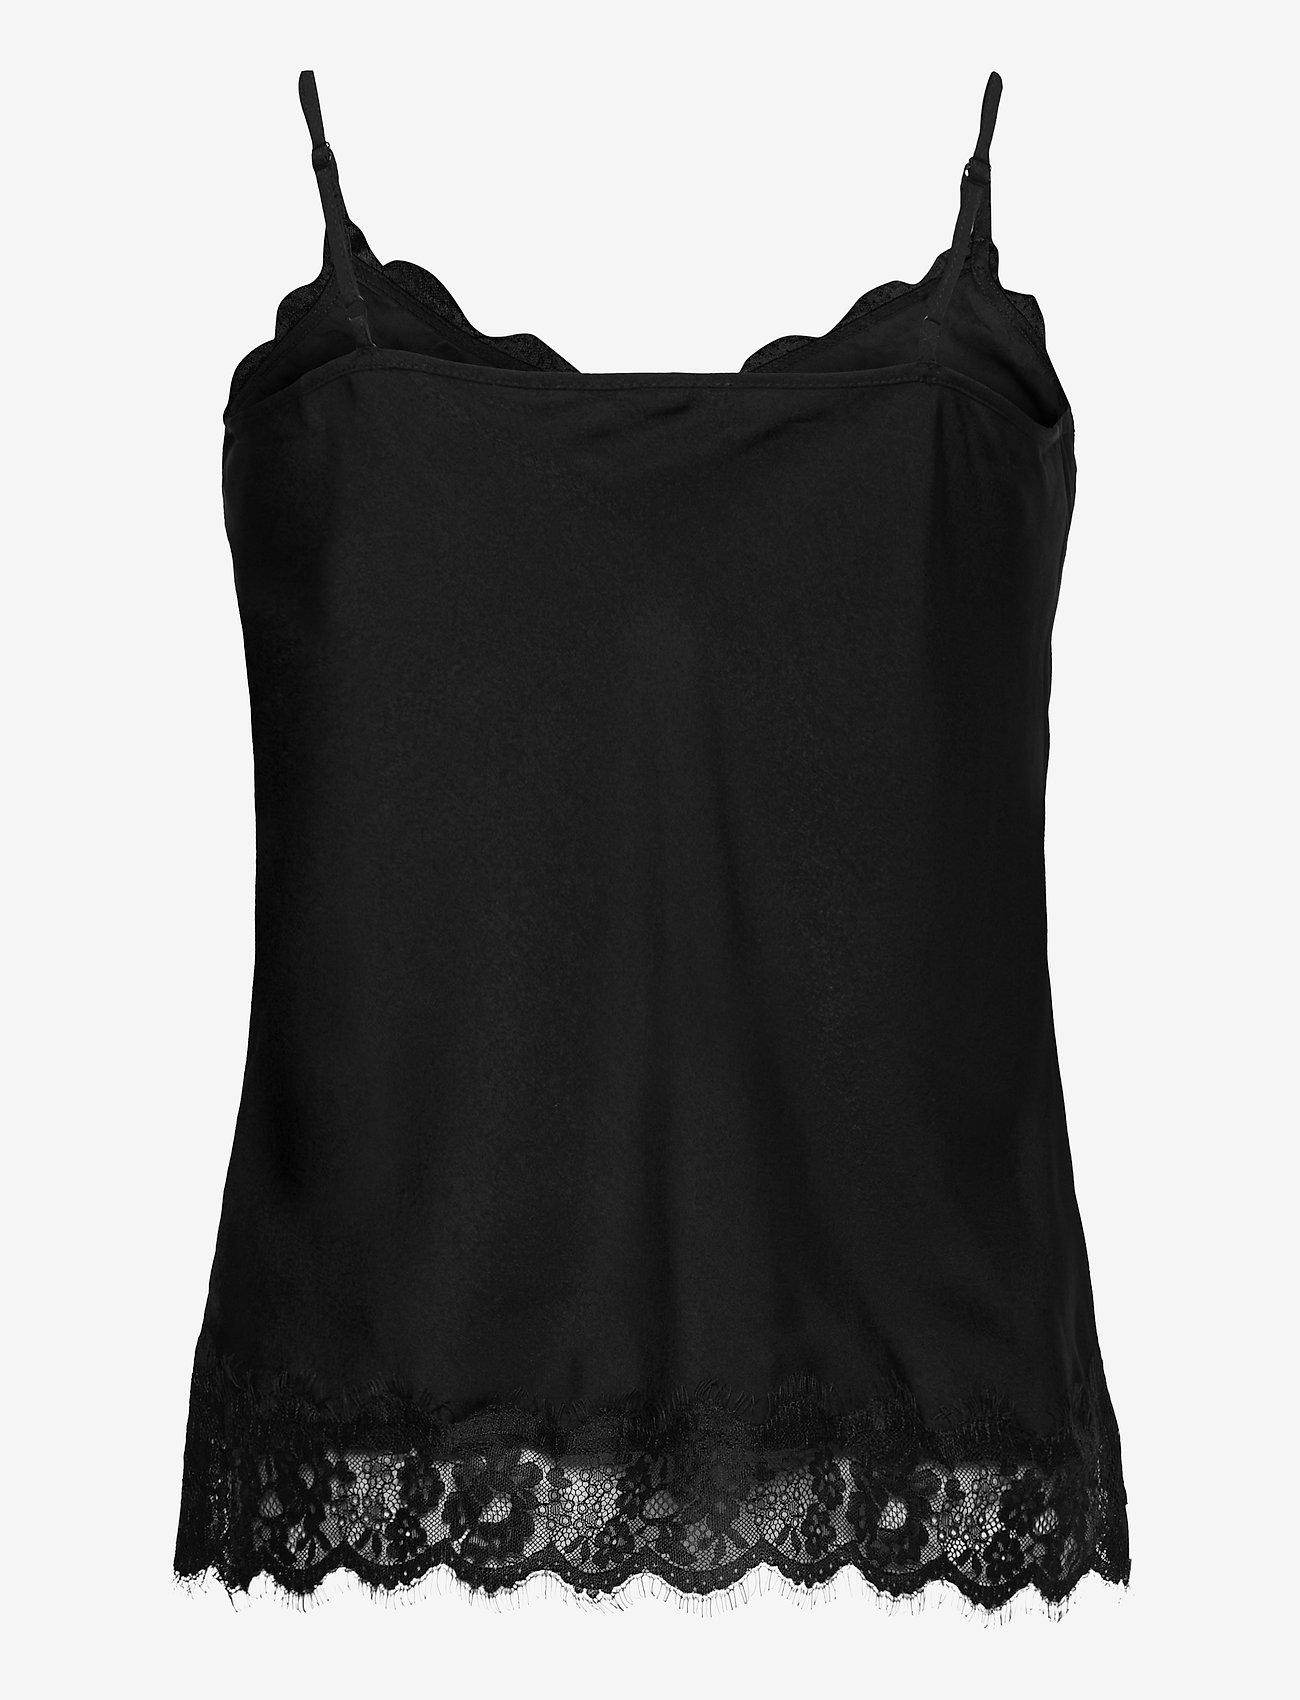 Rosemunde - Recycled polyester strap top - black - 1